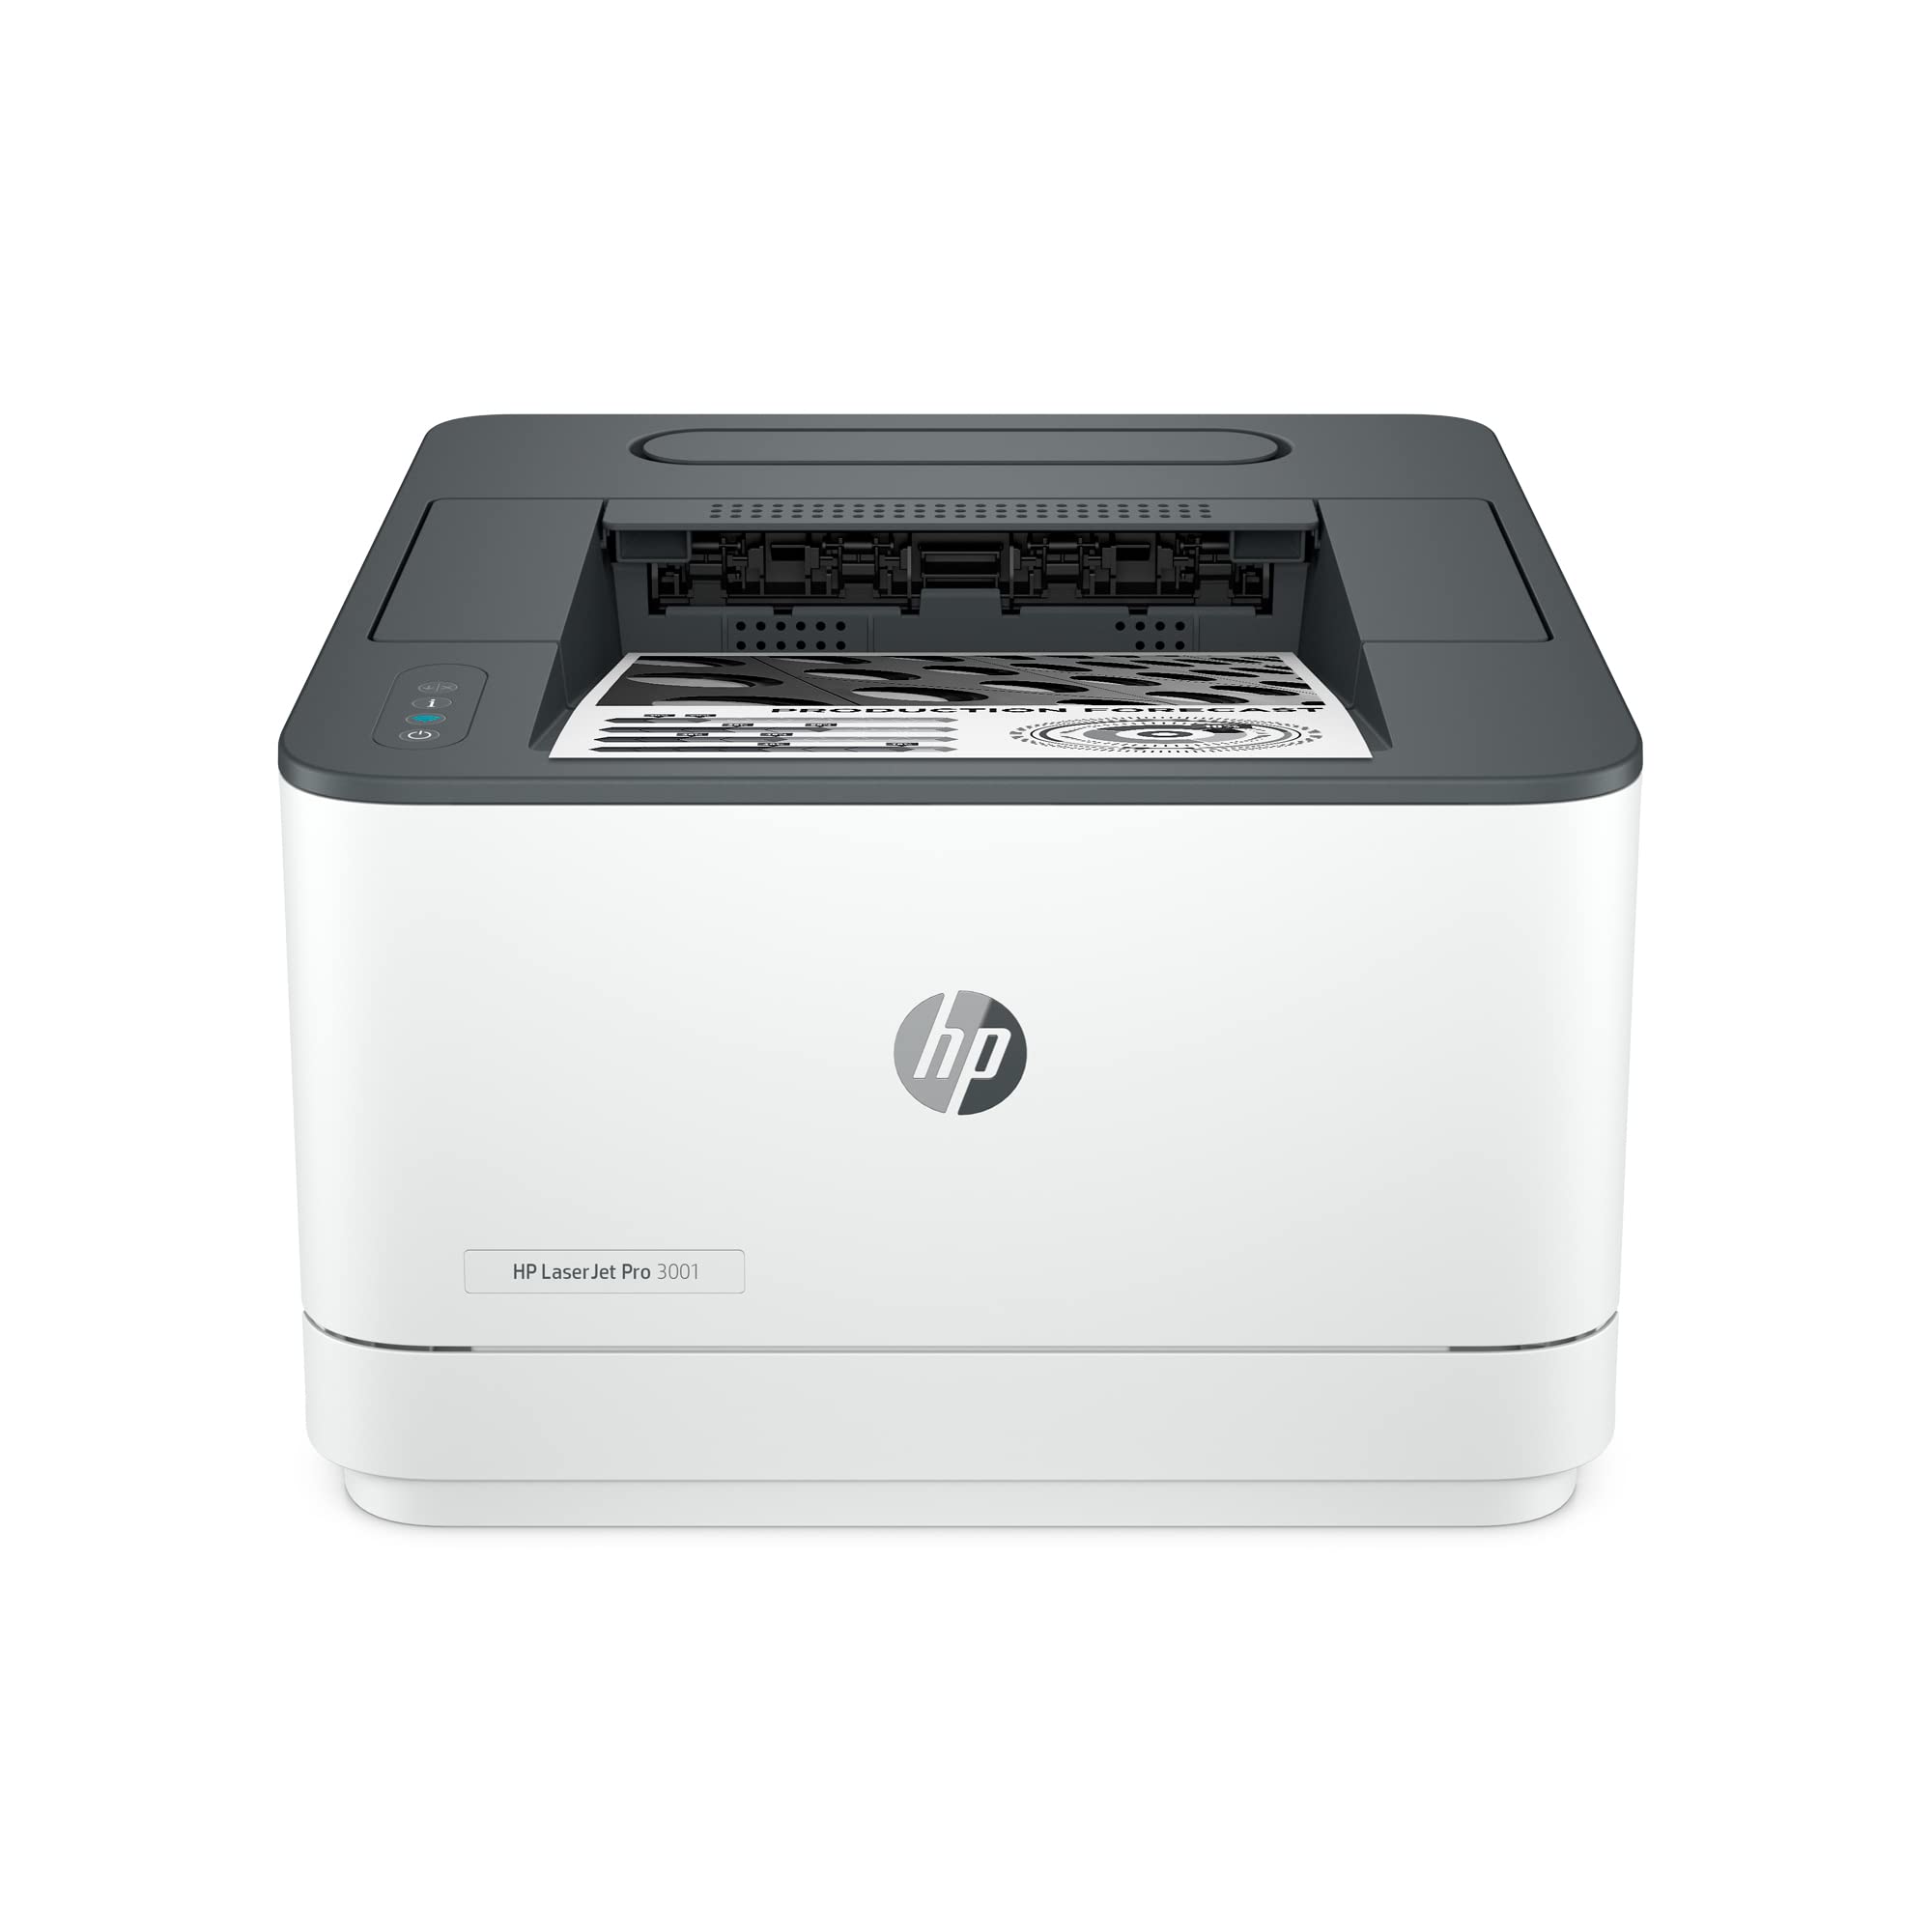 HP LaserJet Pro 3001dw impressora sem fio preto e branc...